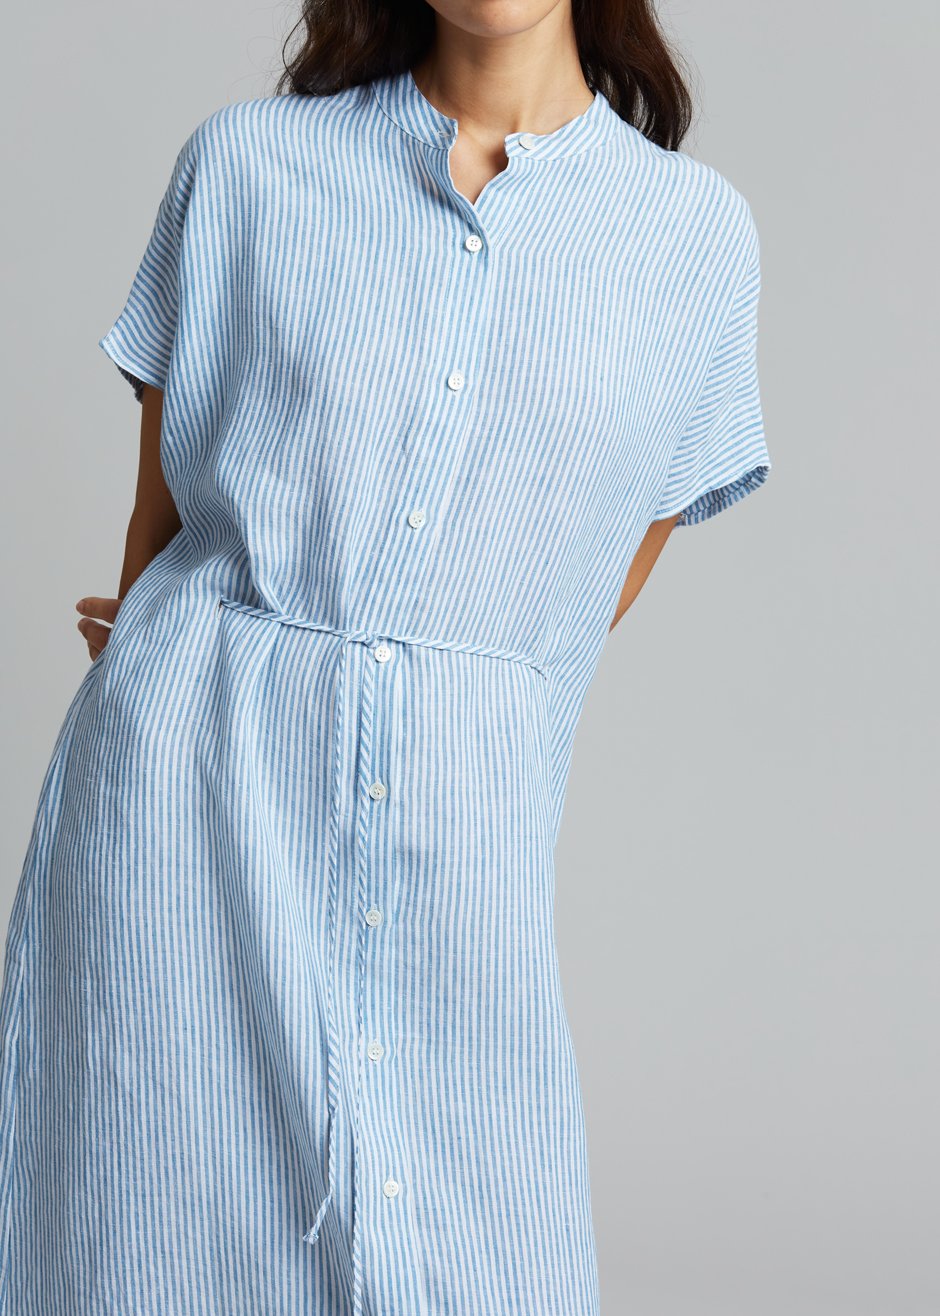 Malin Shirt Dress - Blue/White Stripe - 5